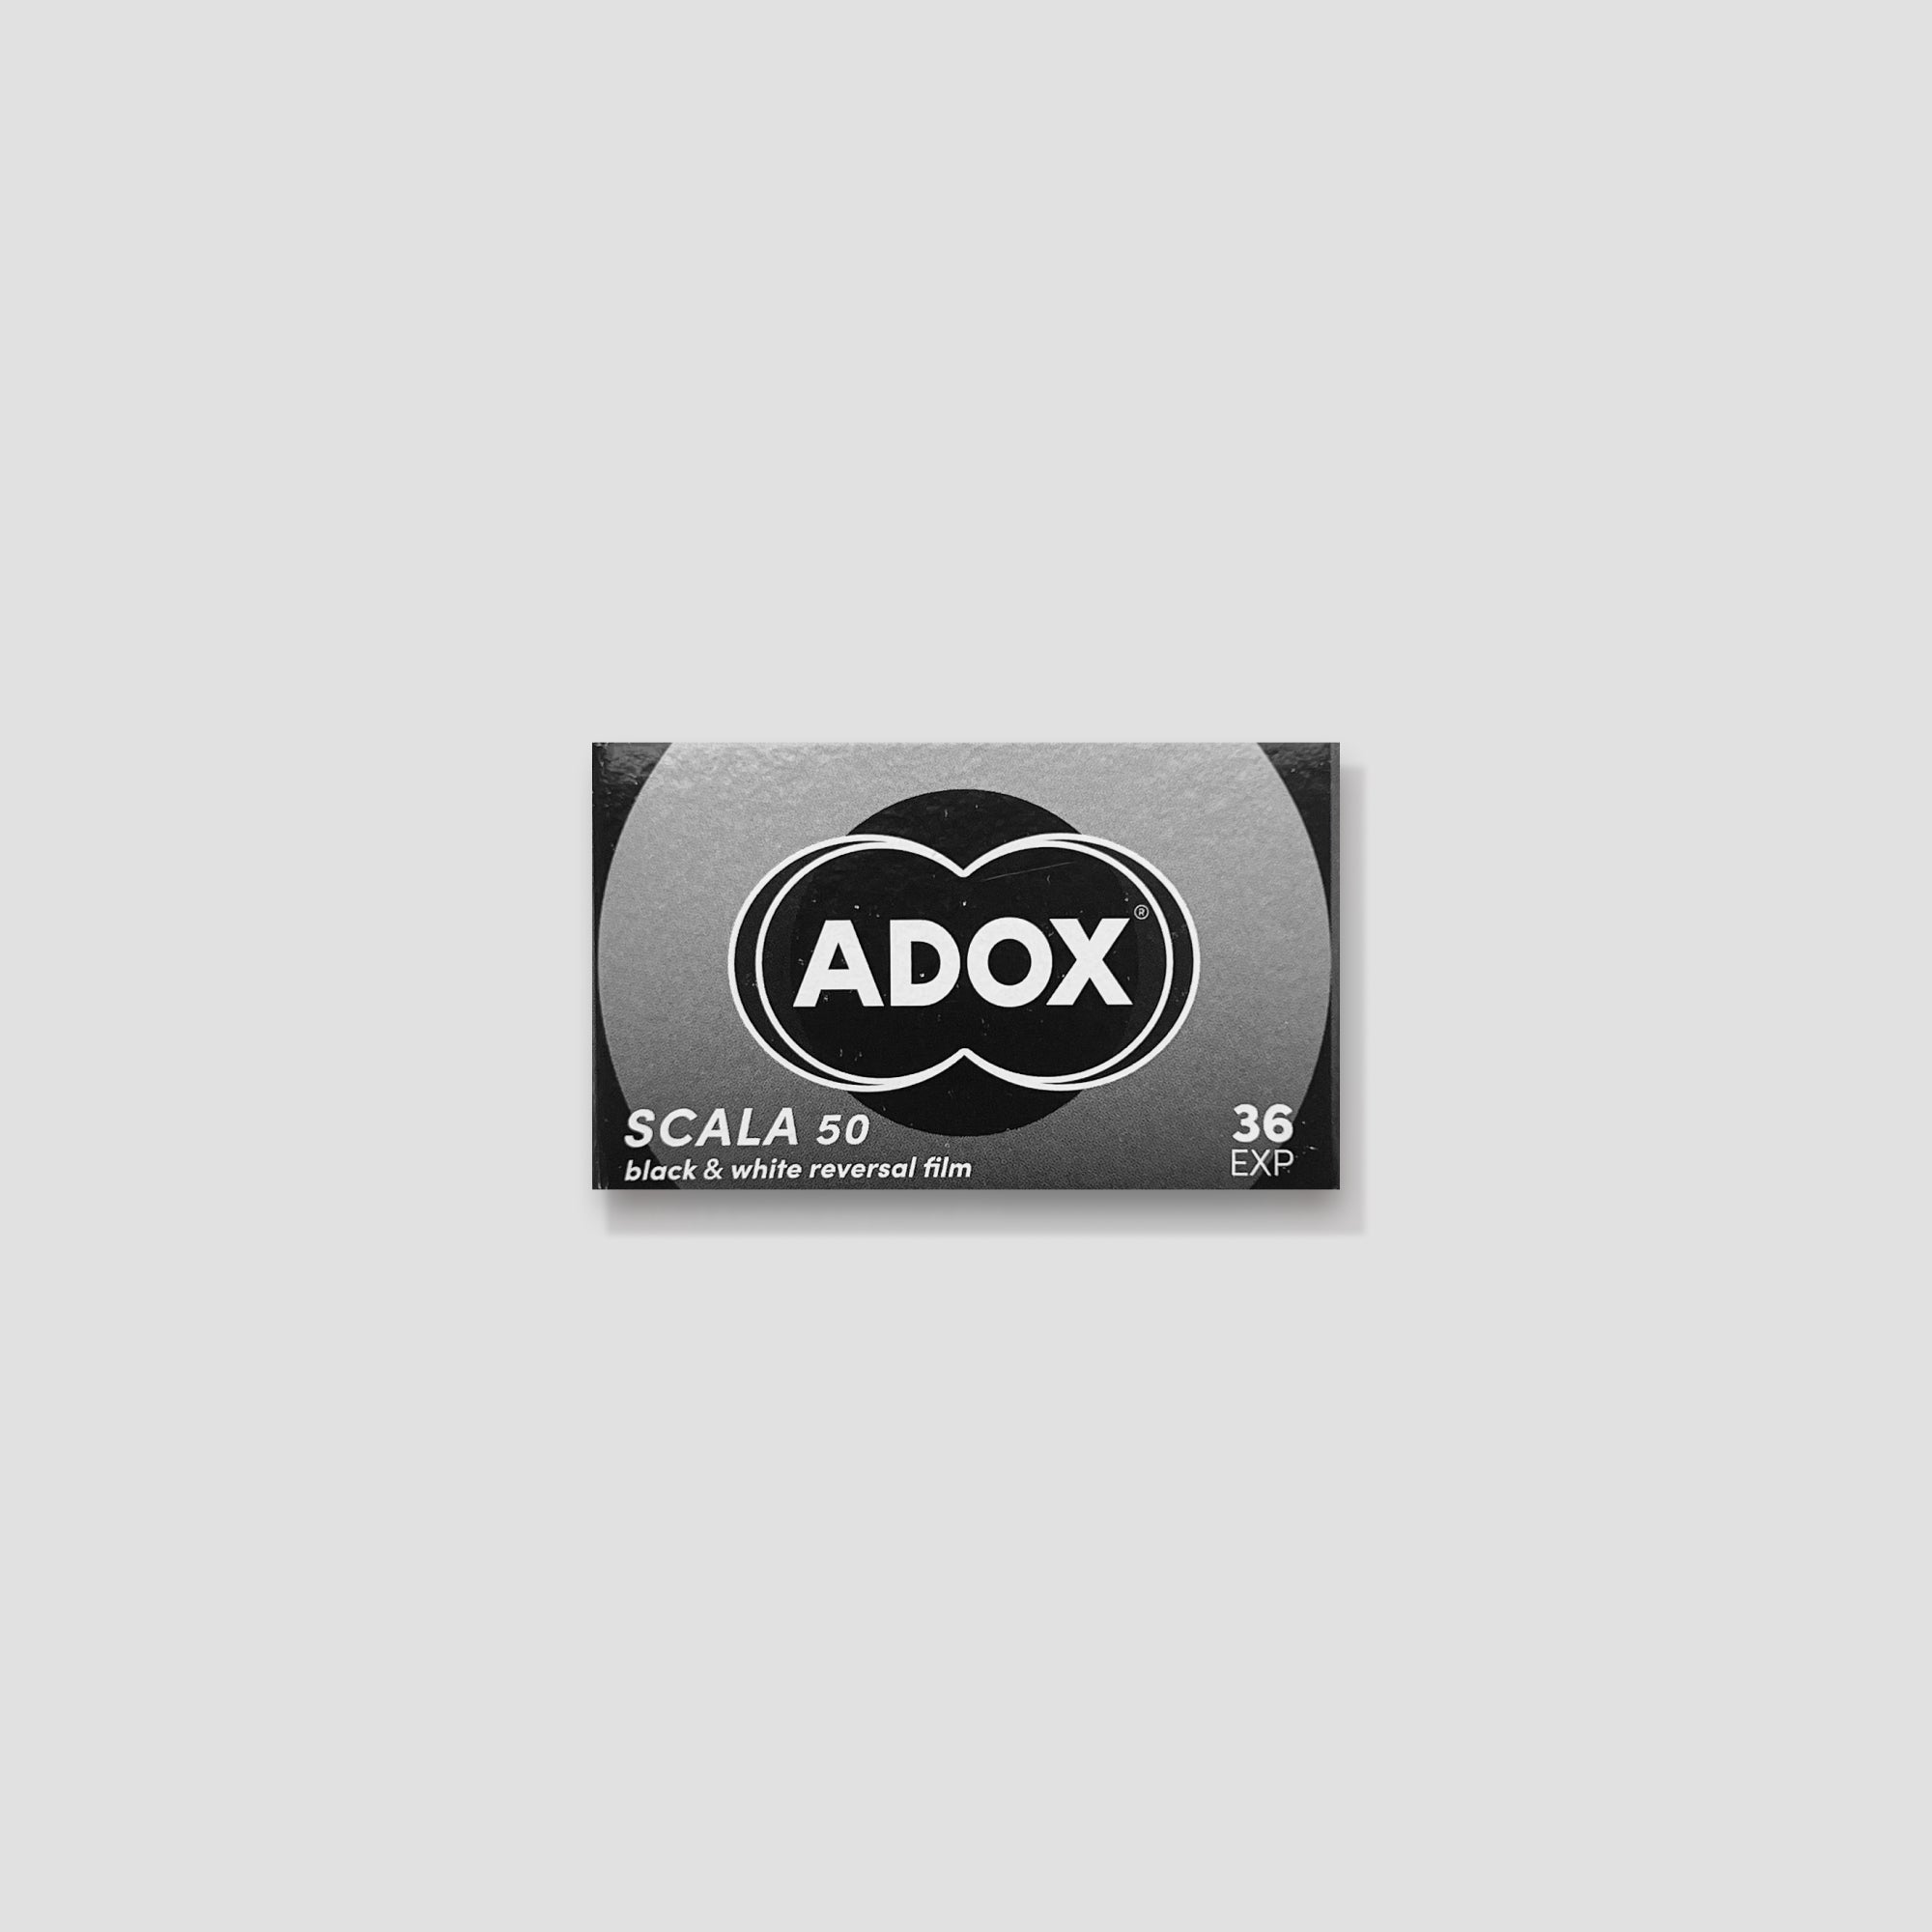 ADOX SCALA 50